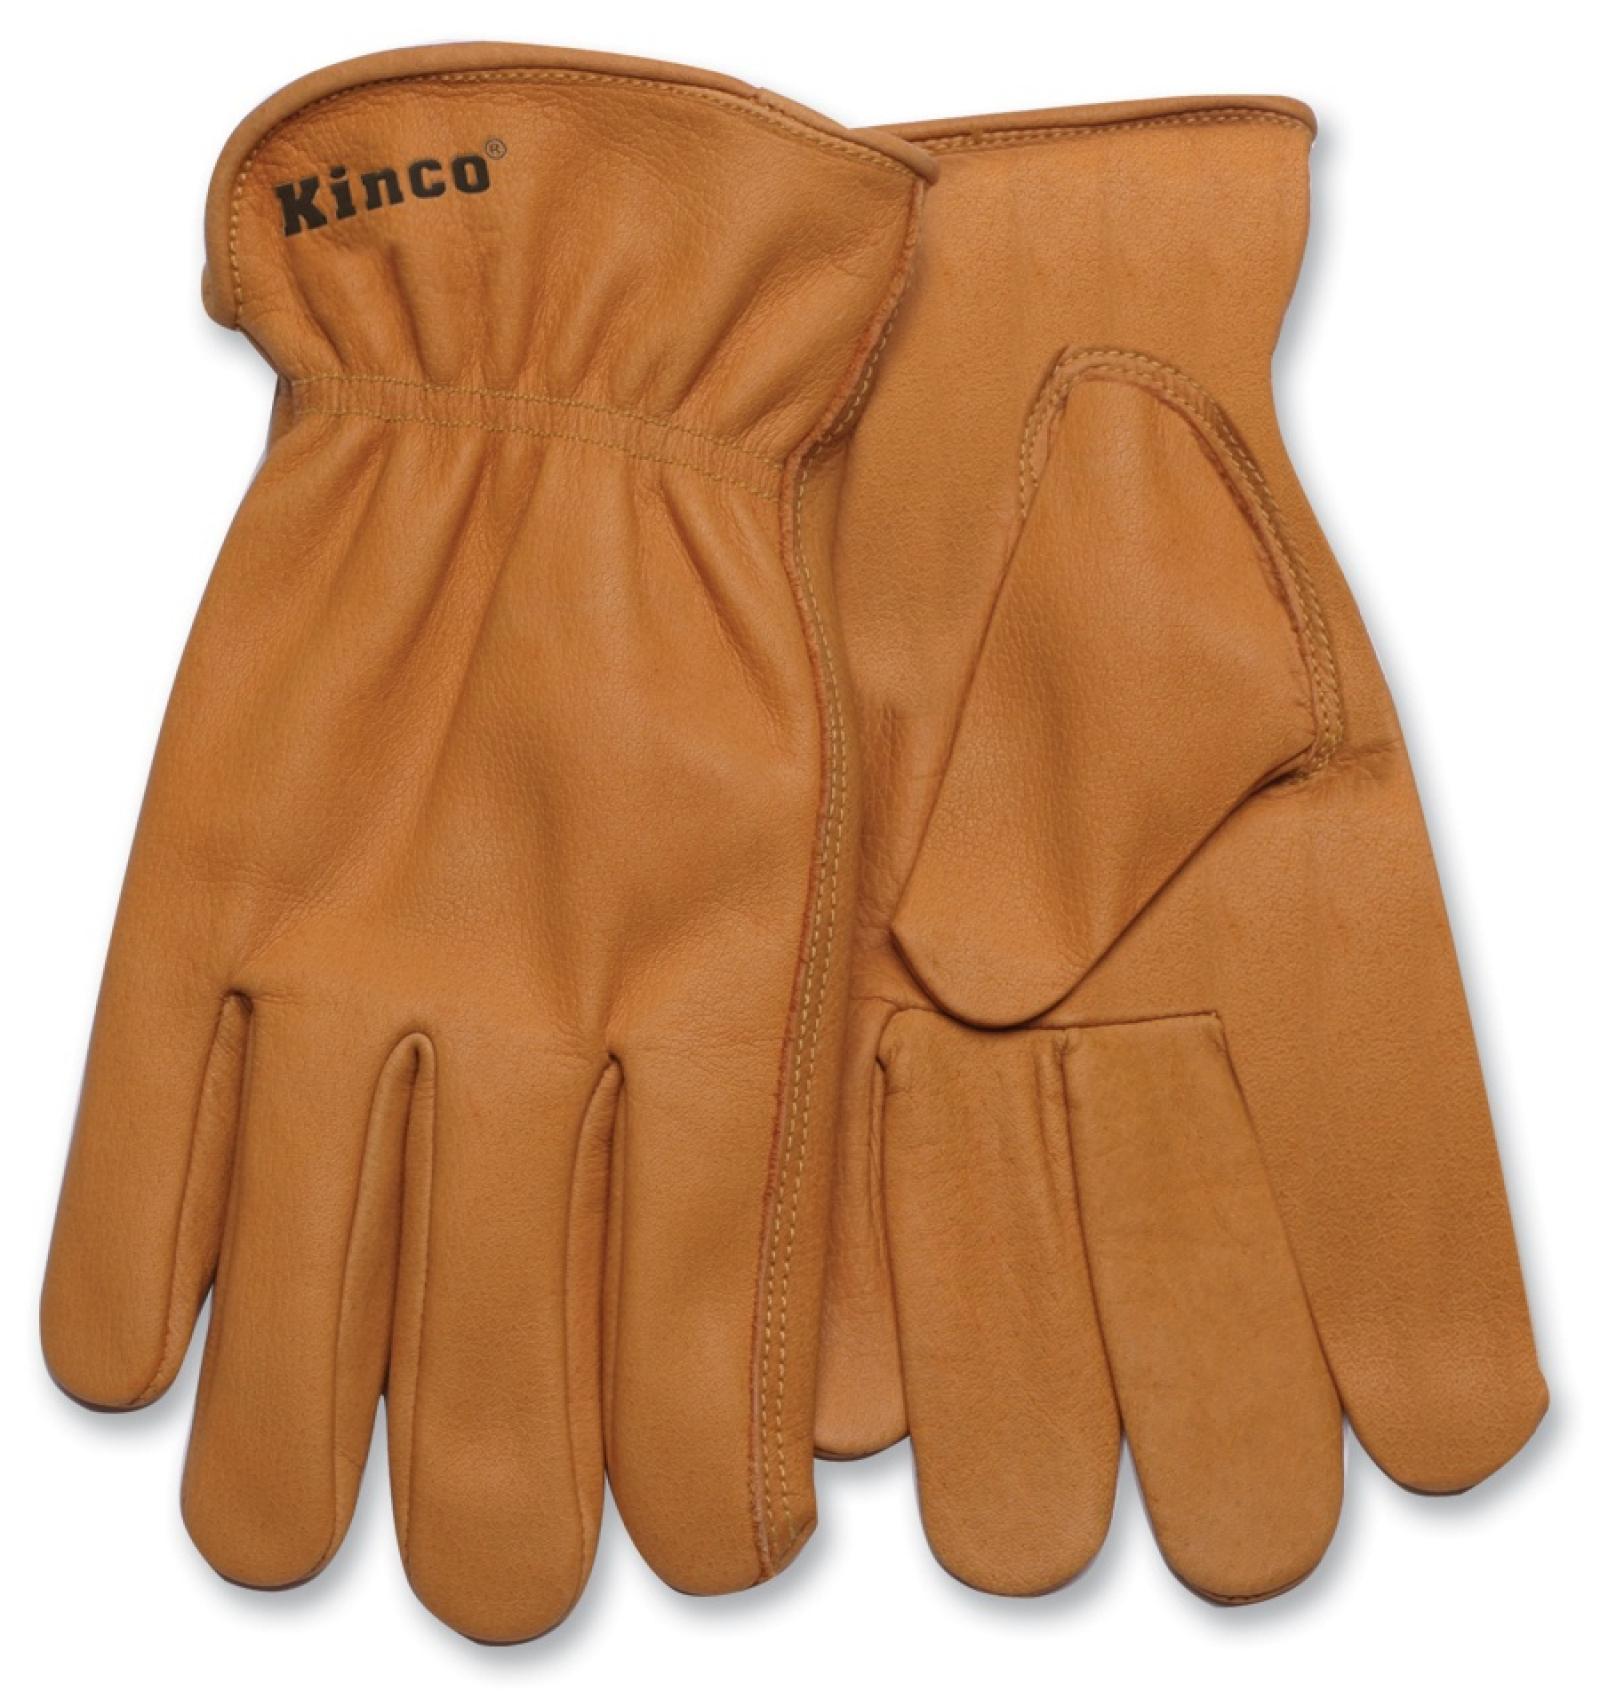 Kinco Men's Grain Buffalo Driver Gloves